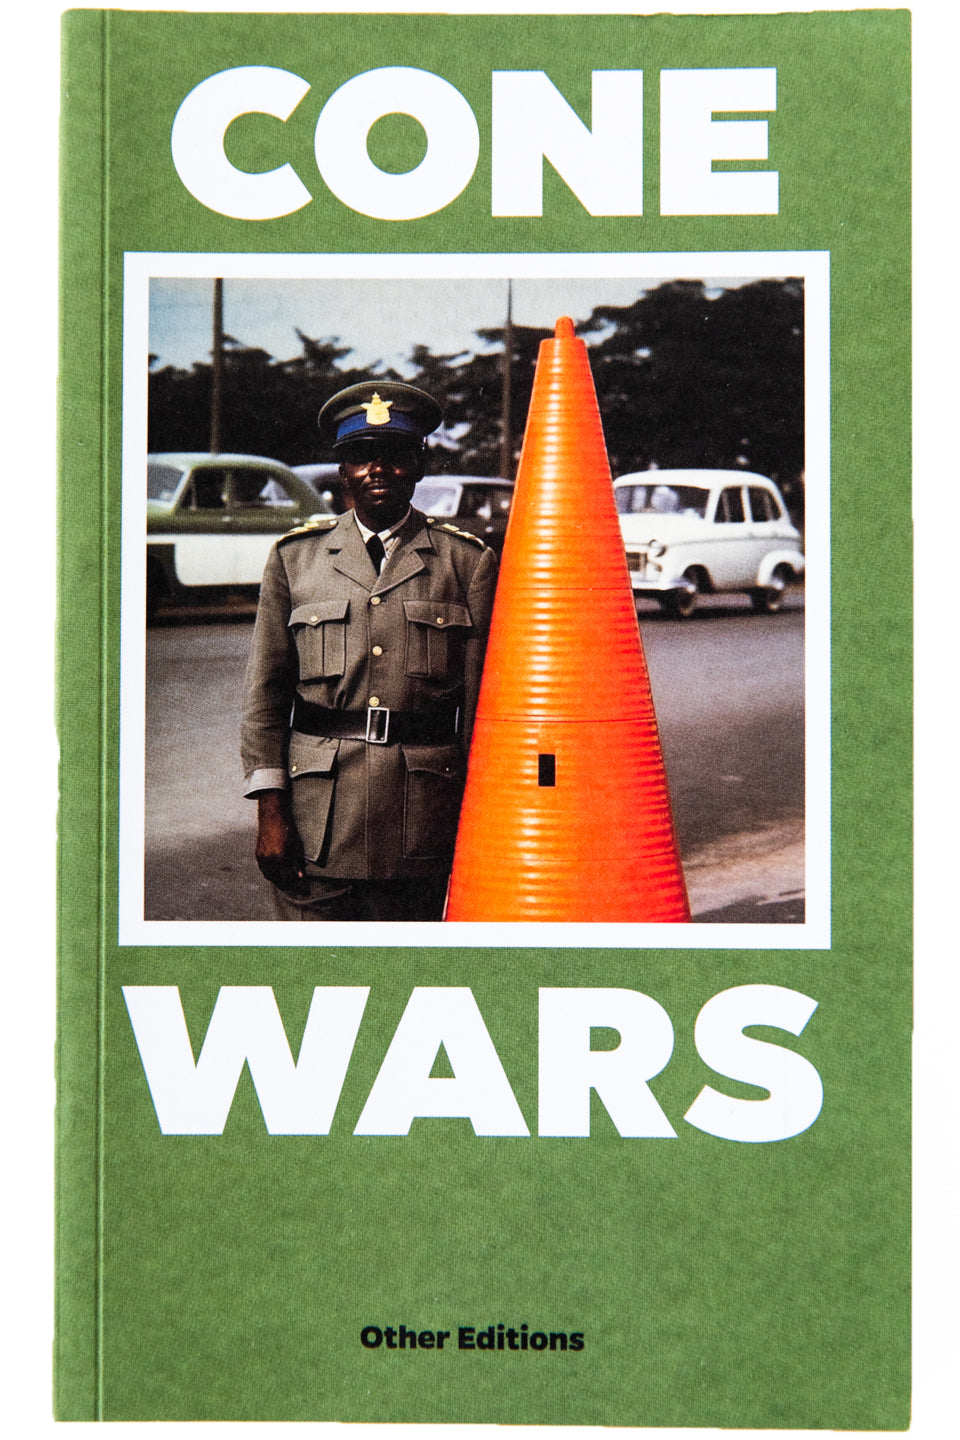 CONE WARS | A Surreal Journey Into Traffic Cones